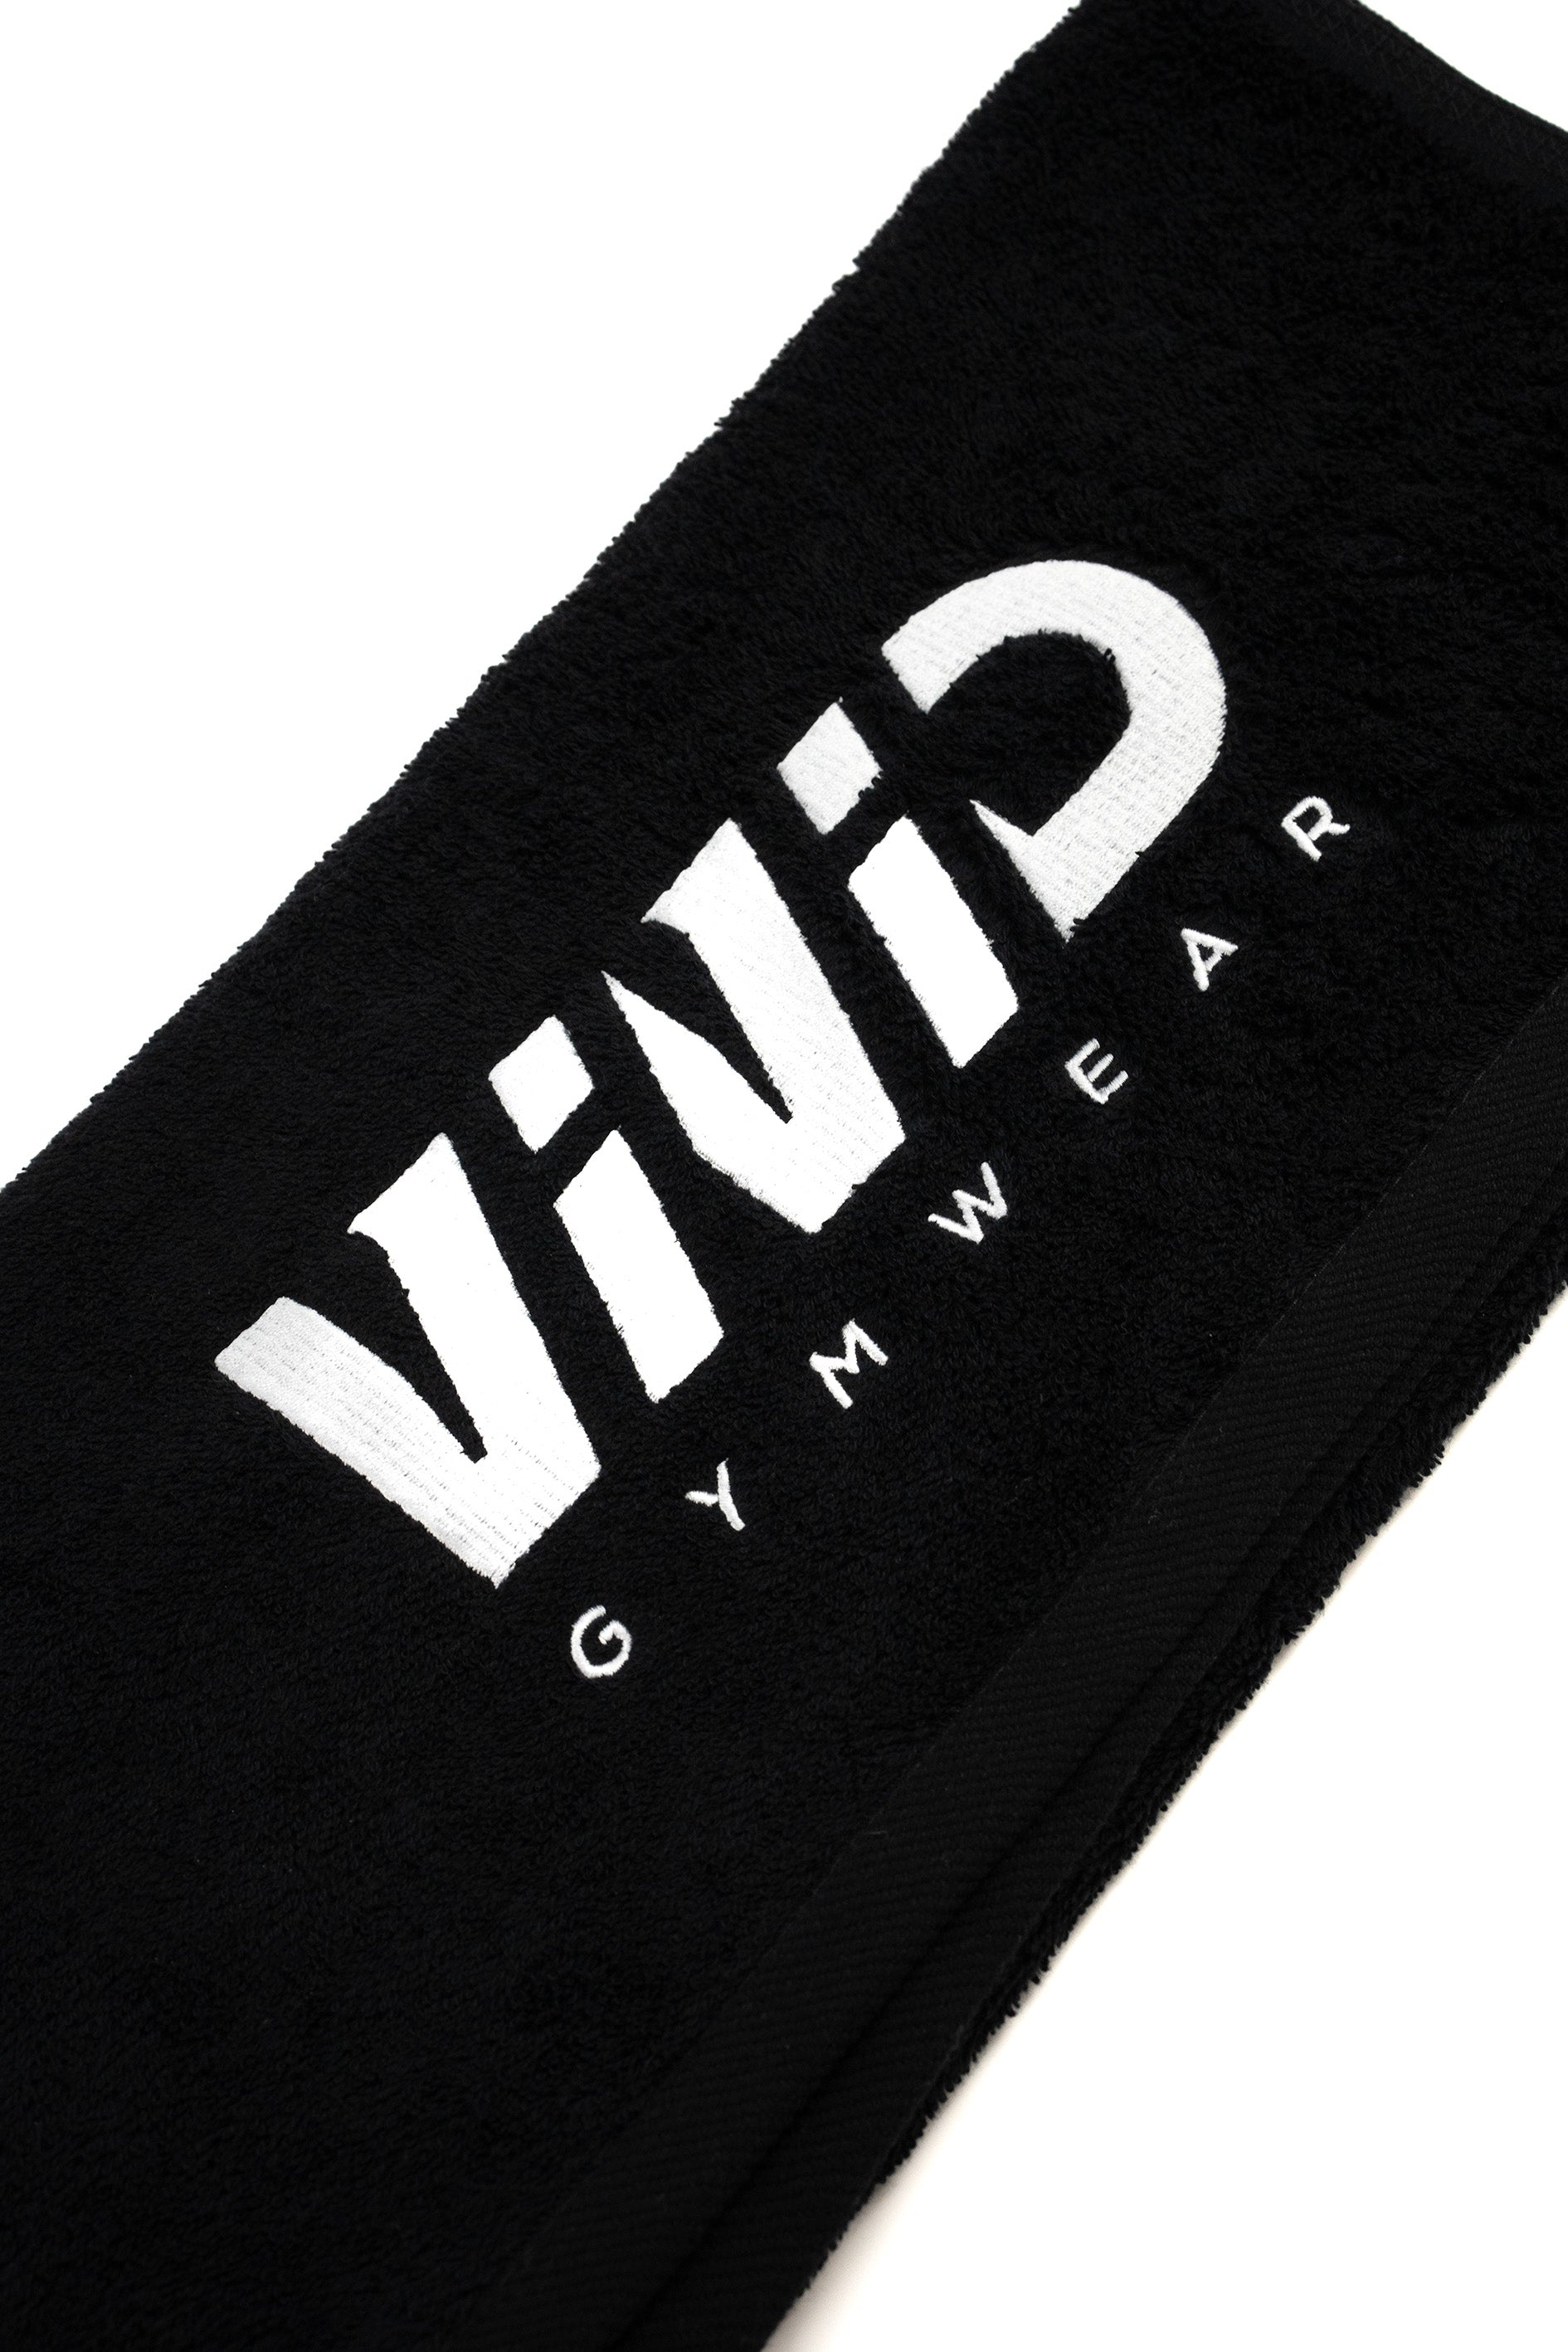 VIVID Sweat Towel